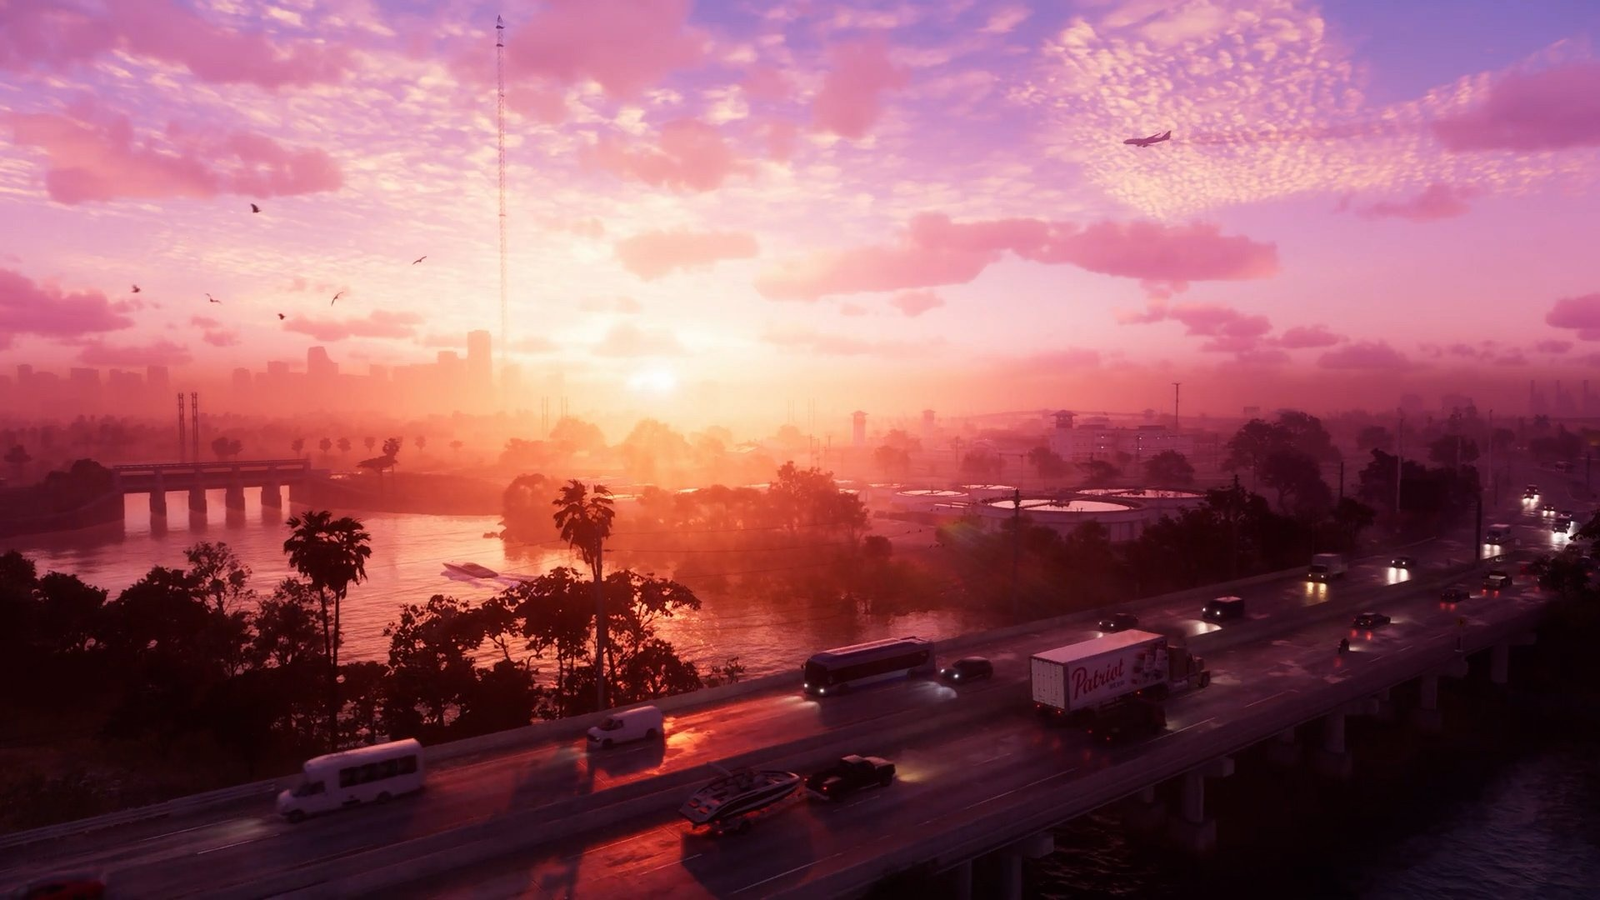 Grand Theft Auto VI - Official Trailer (2025) 